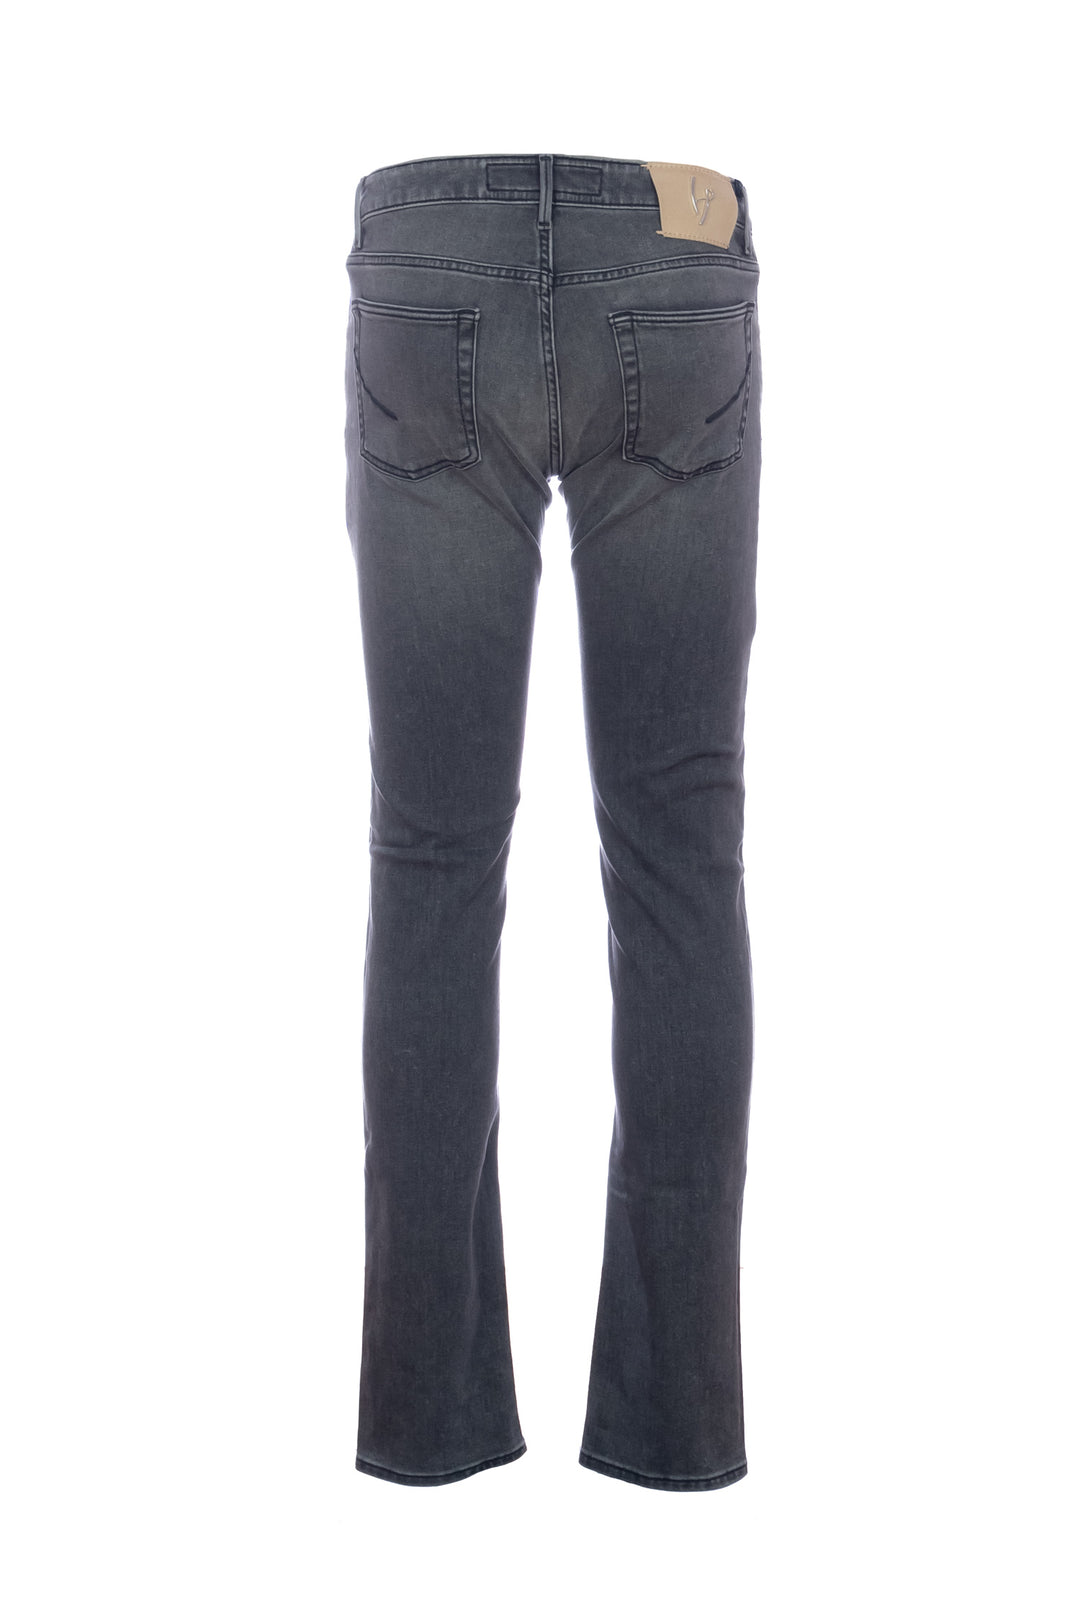 HANDPICKED Jeans 5 tasche “ORVIETO” in denim stretch lavaggio scuro - Mancinelli 1954